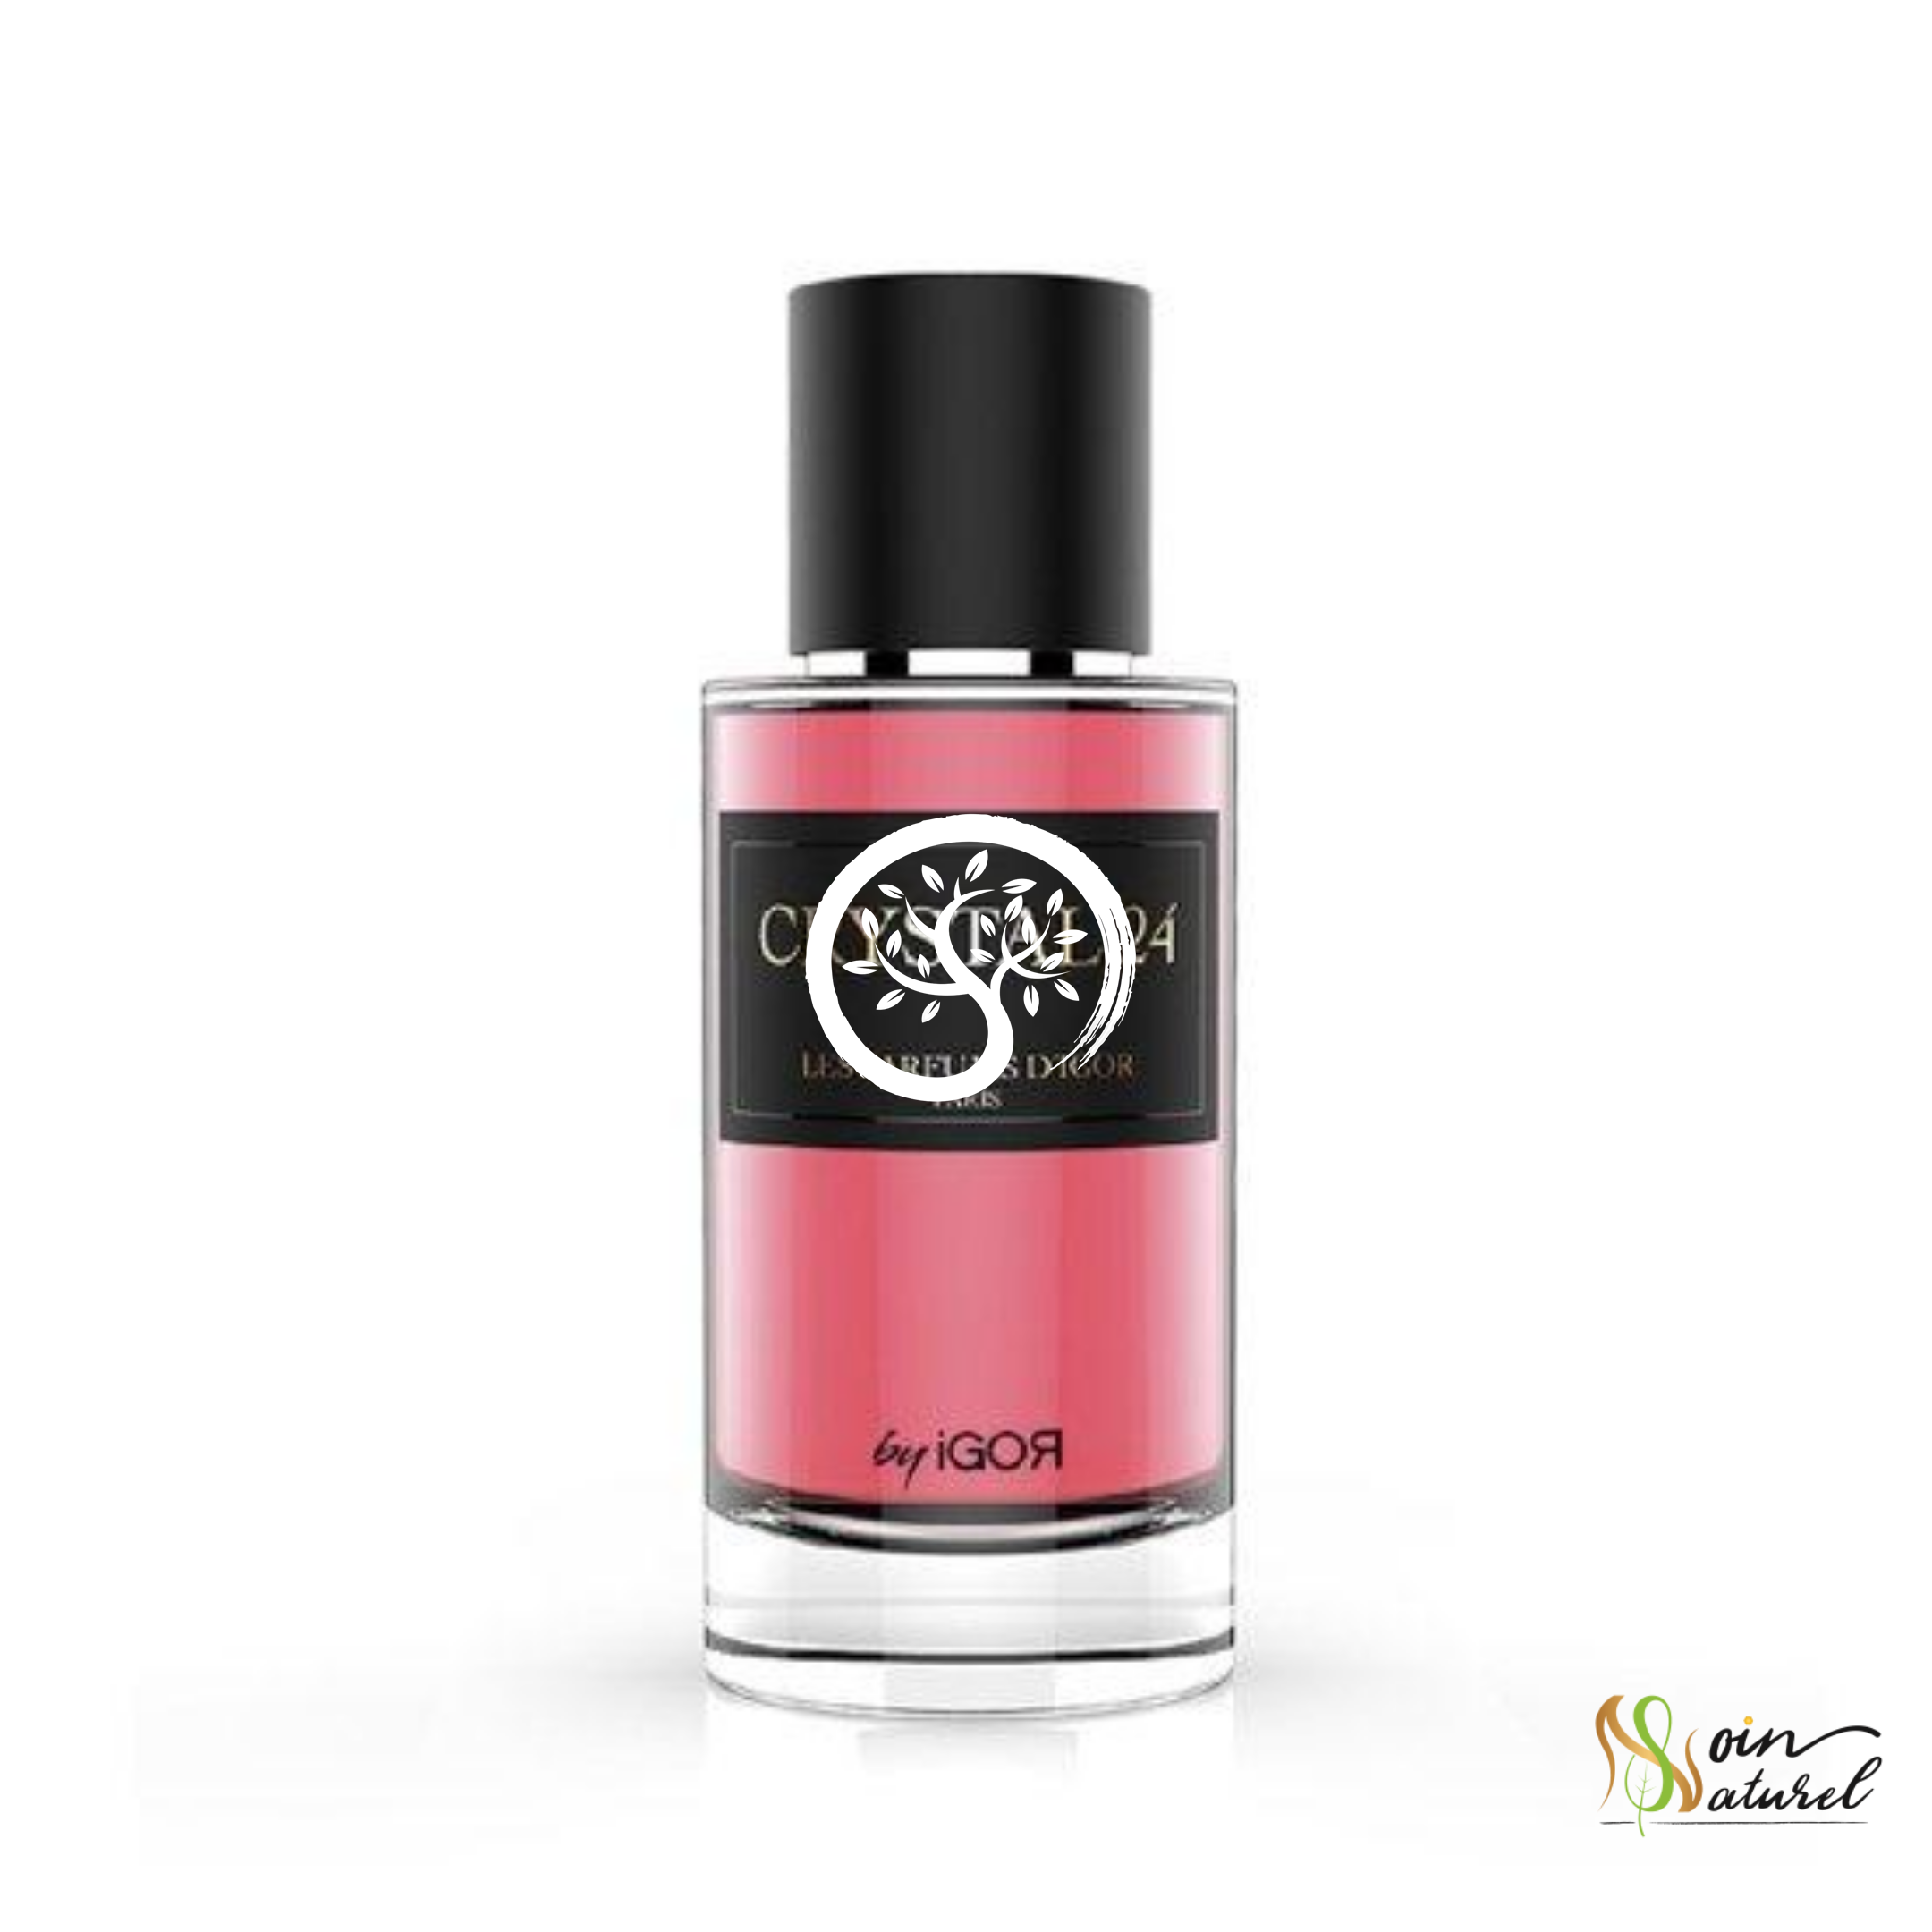 parfum d'Igor "Crystal 24" 50ml